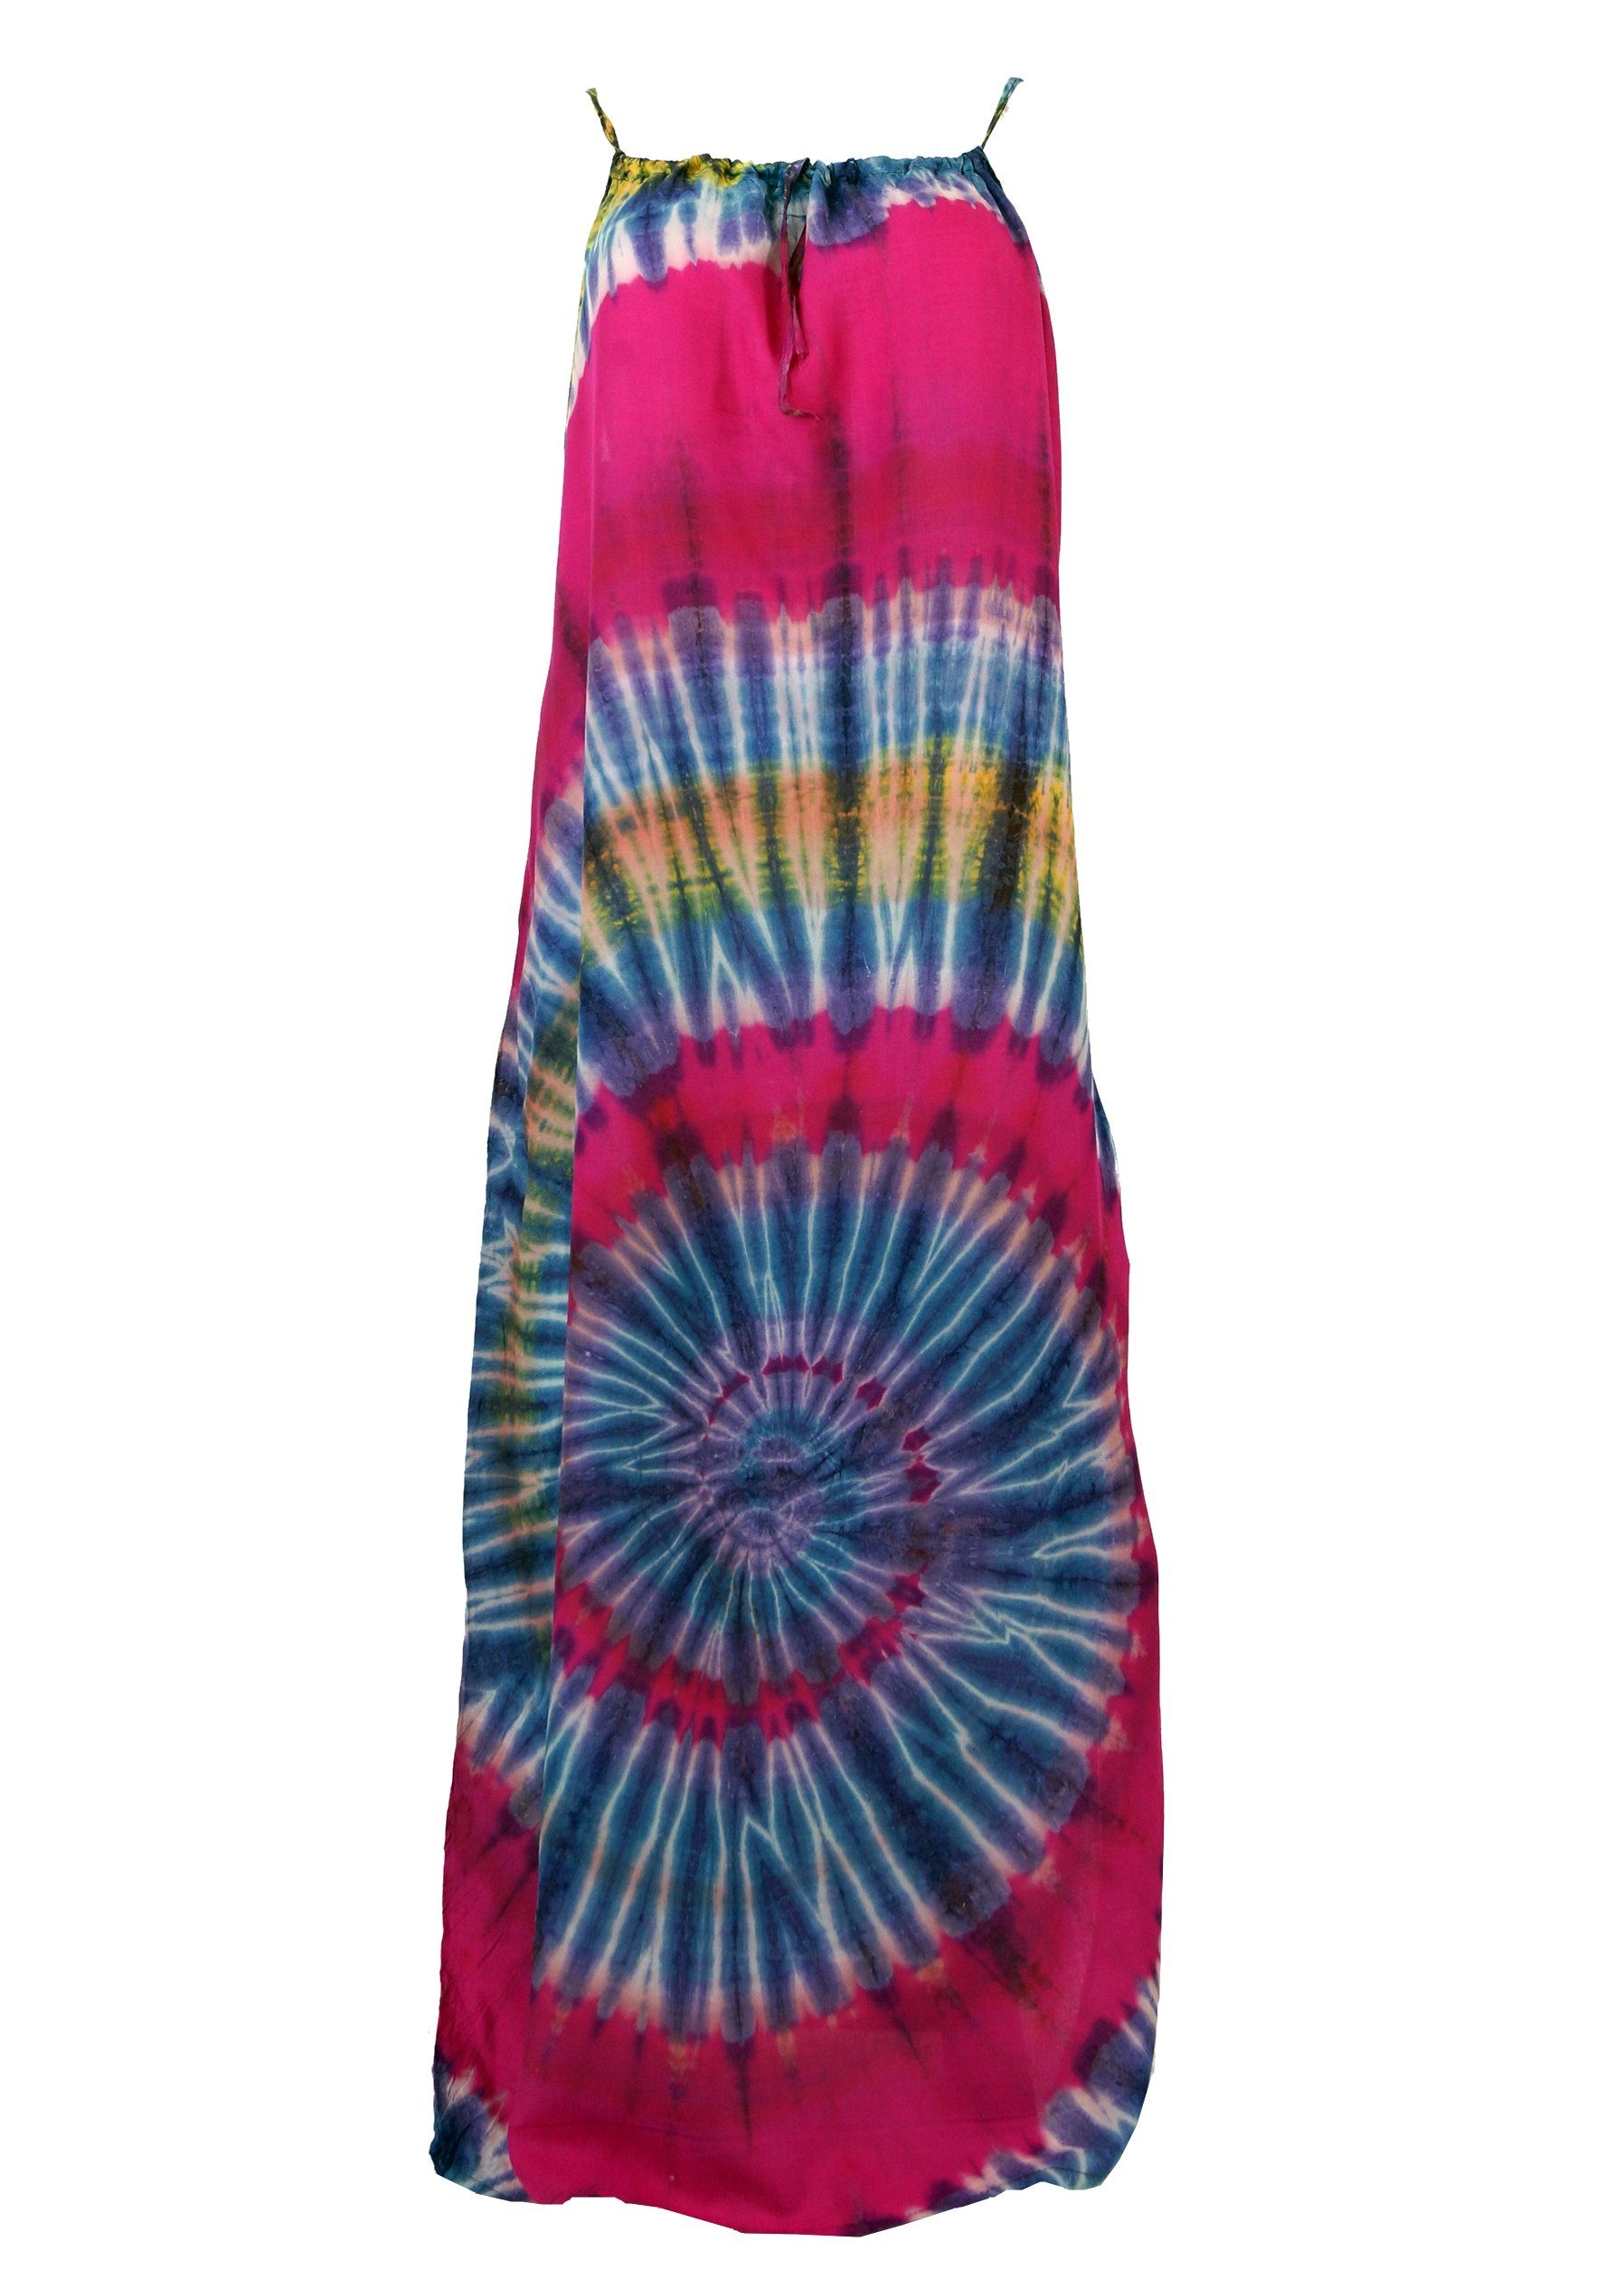 Guru-Shop Midikleid Batik Hippiekleid, Sommerkleid, Trägerkleid,.. alternative Bekleidung pink